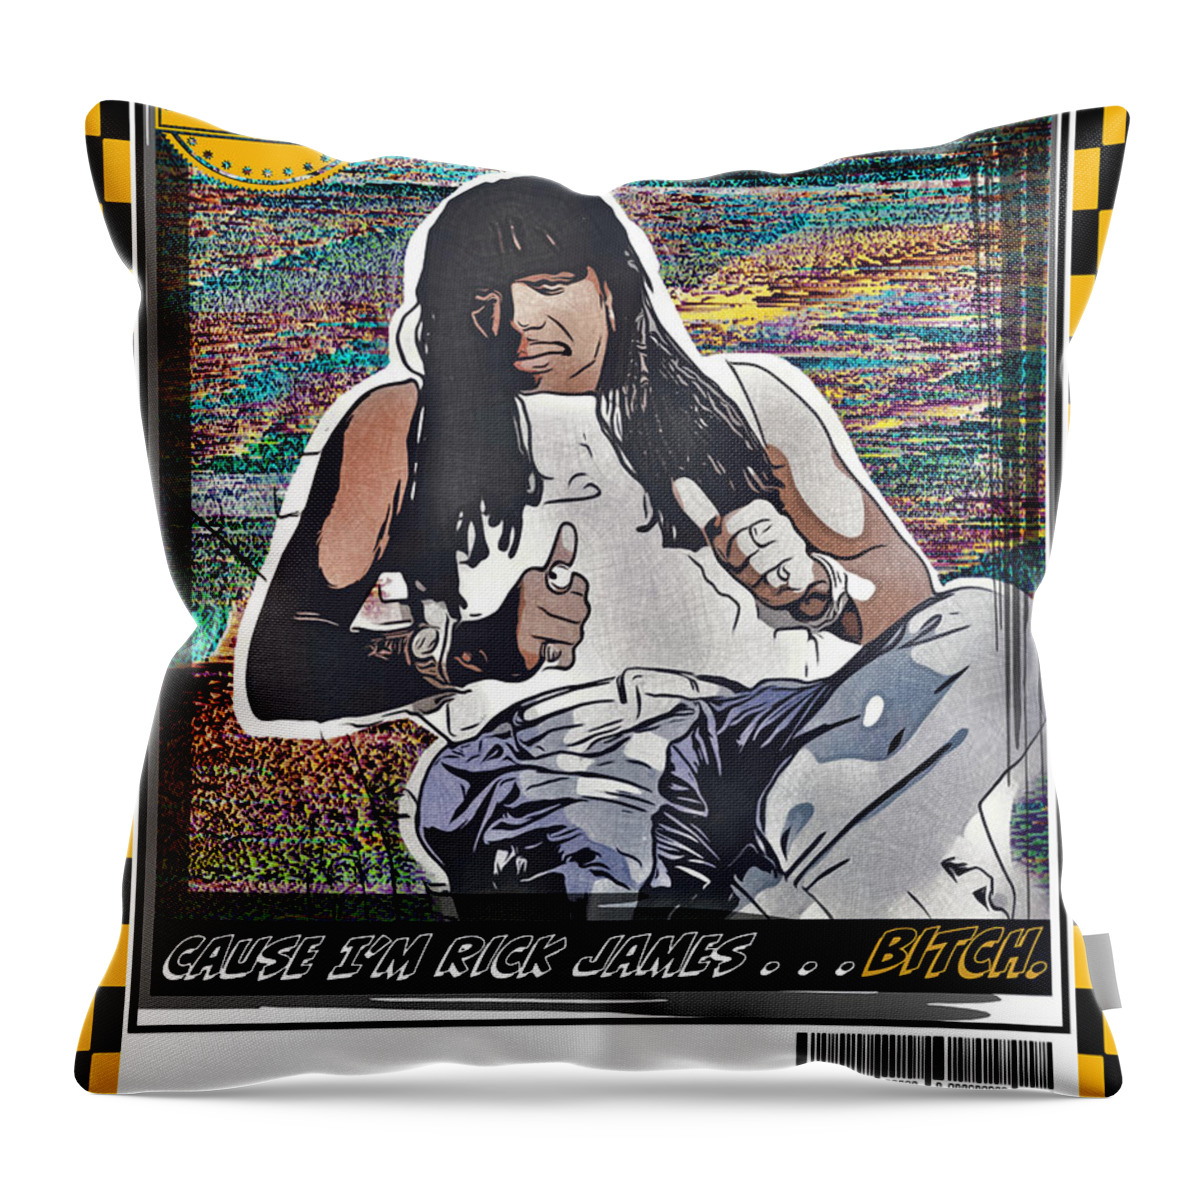 Rick James Throw Pillow featuring the digital art Rick James Bitch Issue No. 1983 by Christina Rick